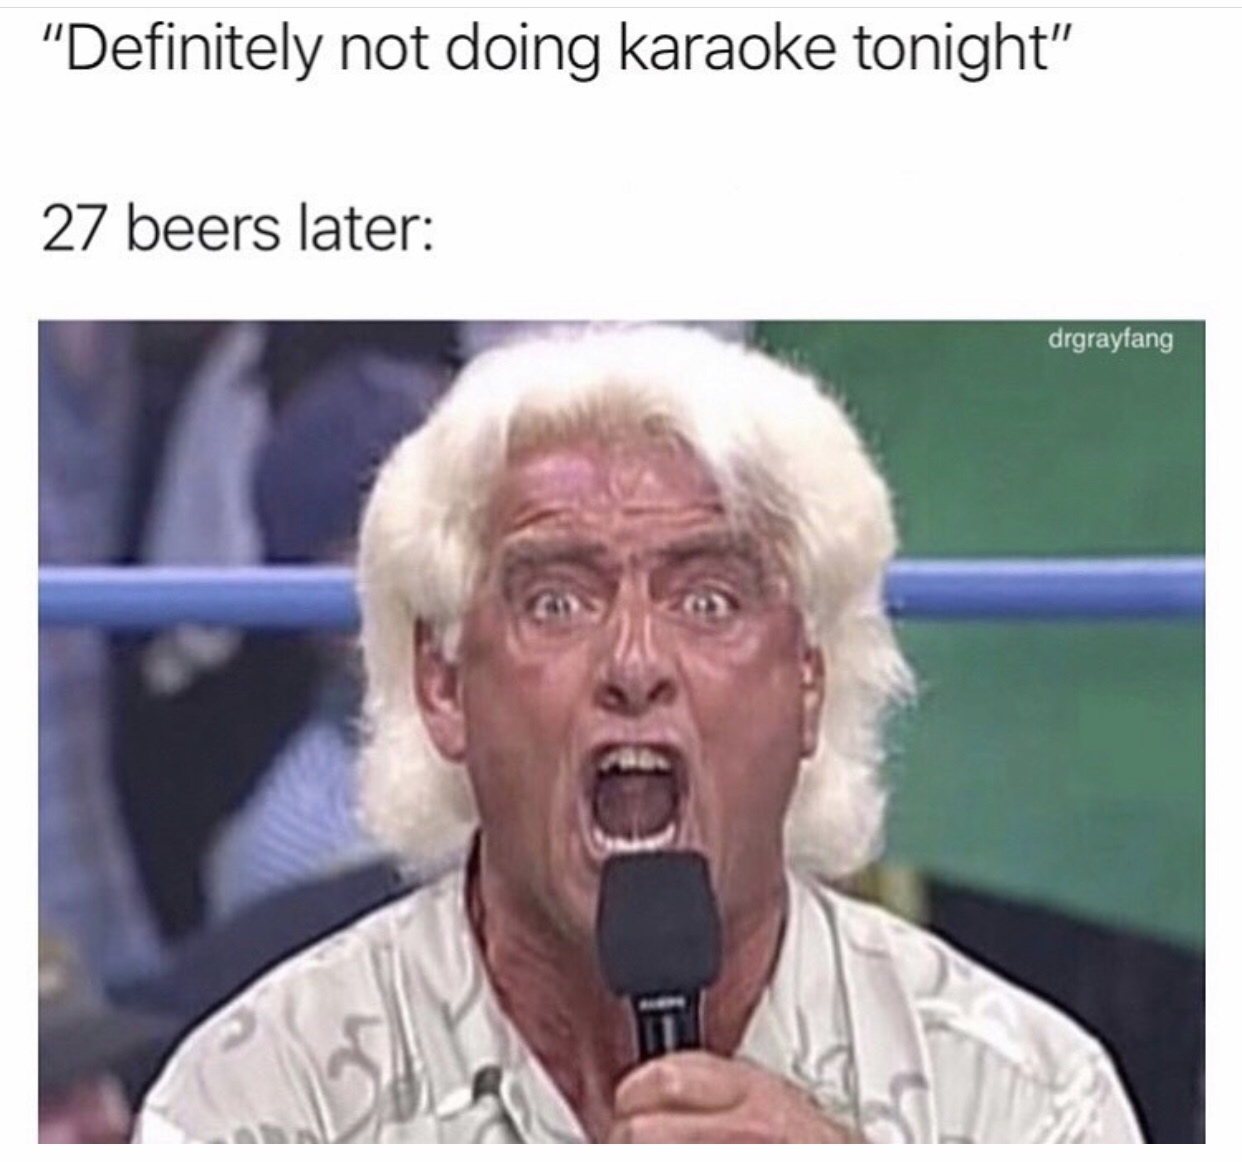 ric flair karaoke meme - "Definitely not doing karaoke tonight" 27 beers later drgrayfang